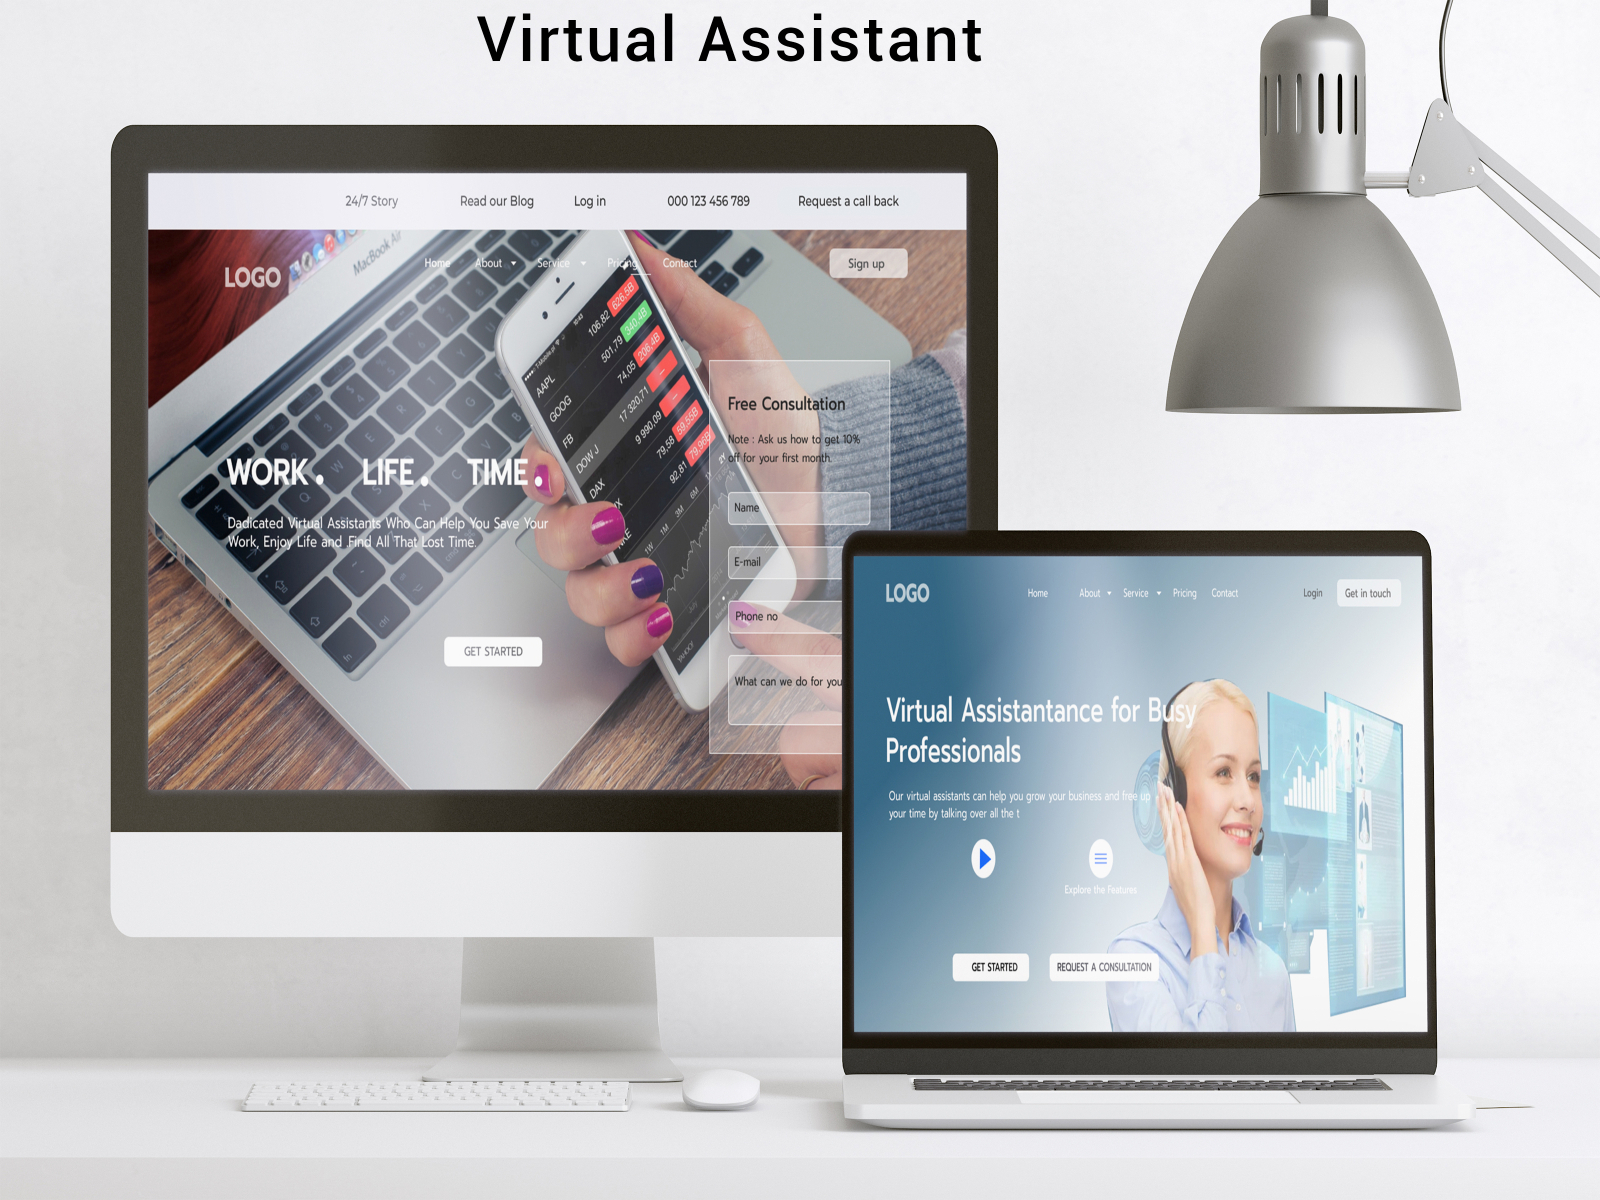 Virtual Assistant by Ferdousi Chowdhury on Dribbble